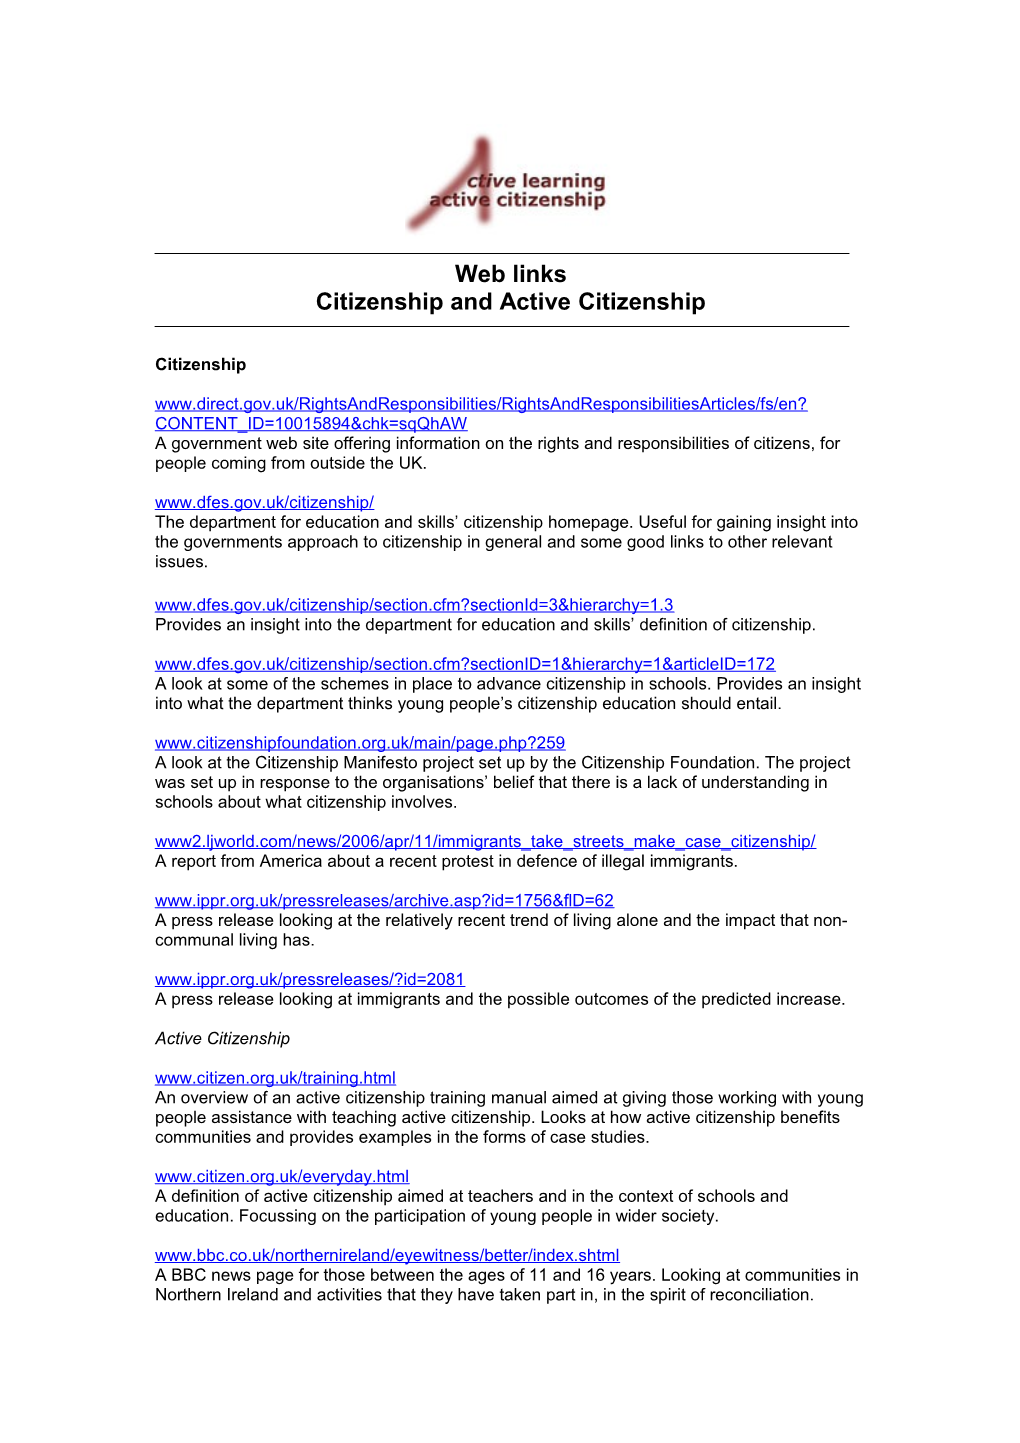 Weblinks on Citizenship and Active Citizenship